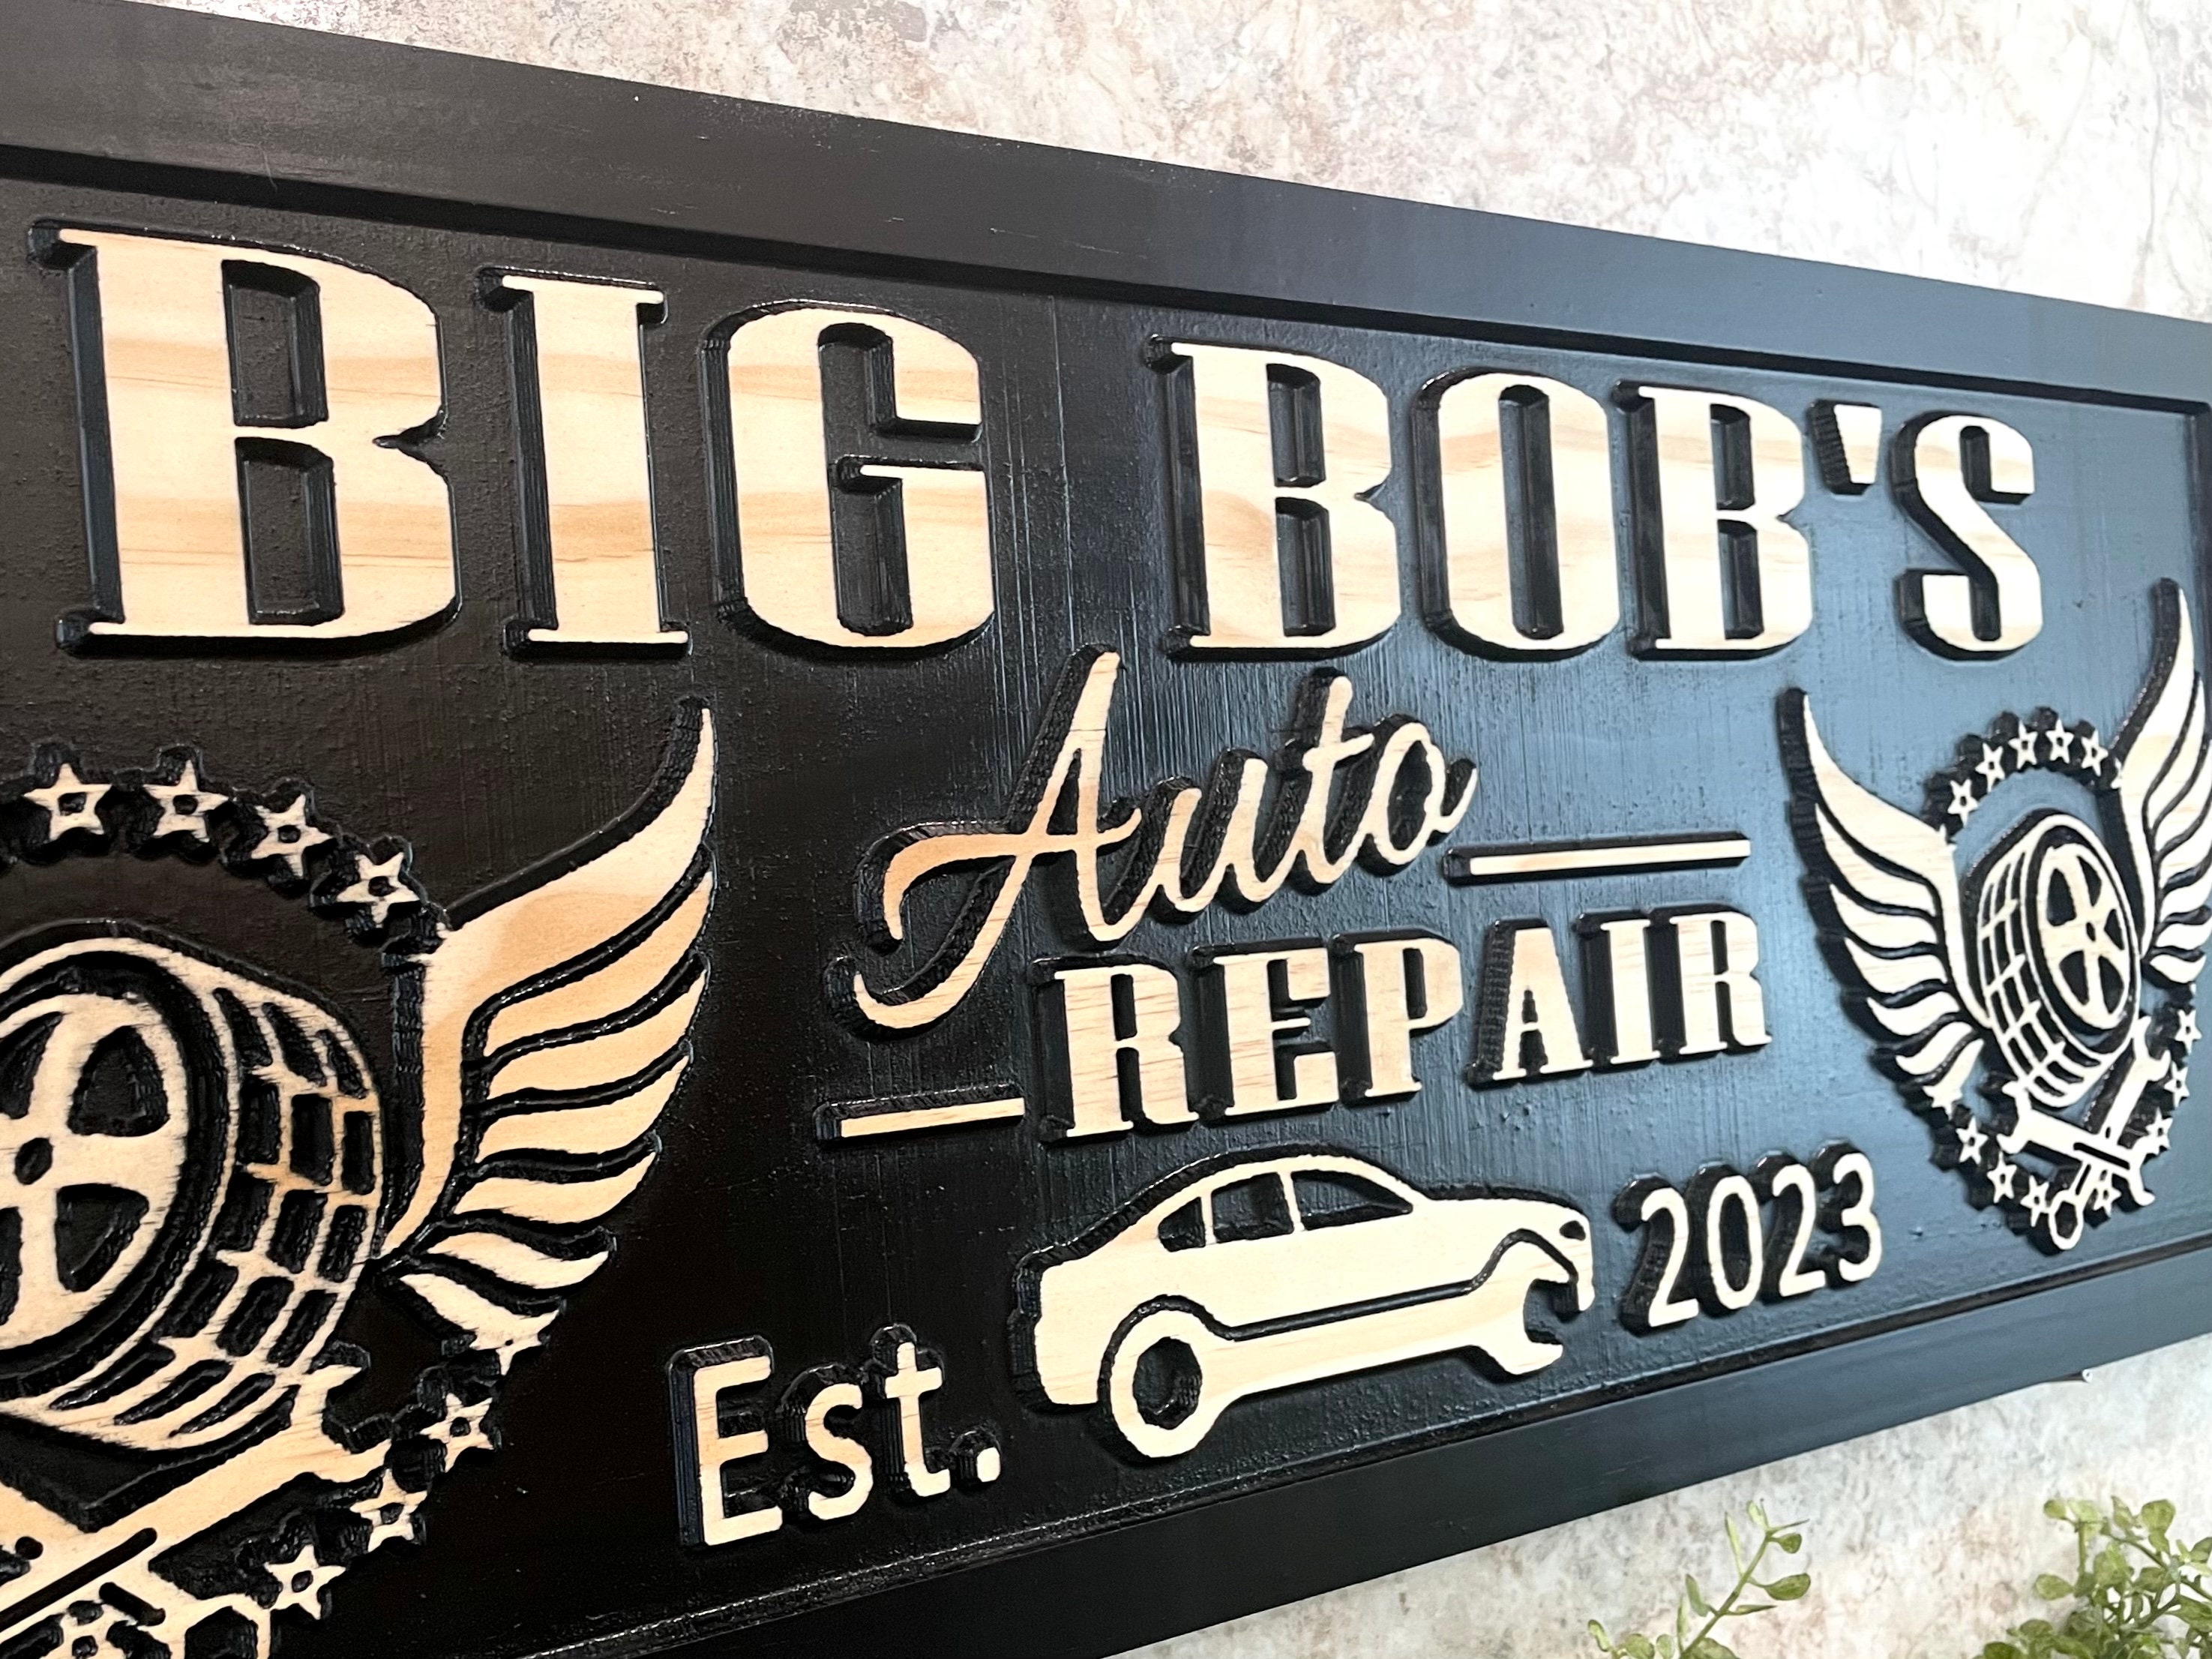 automotive repair signs